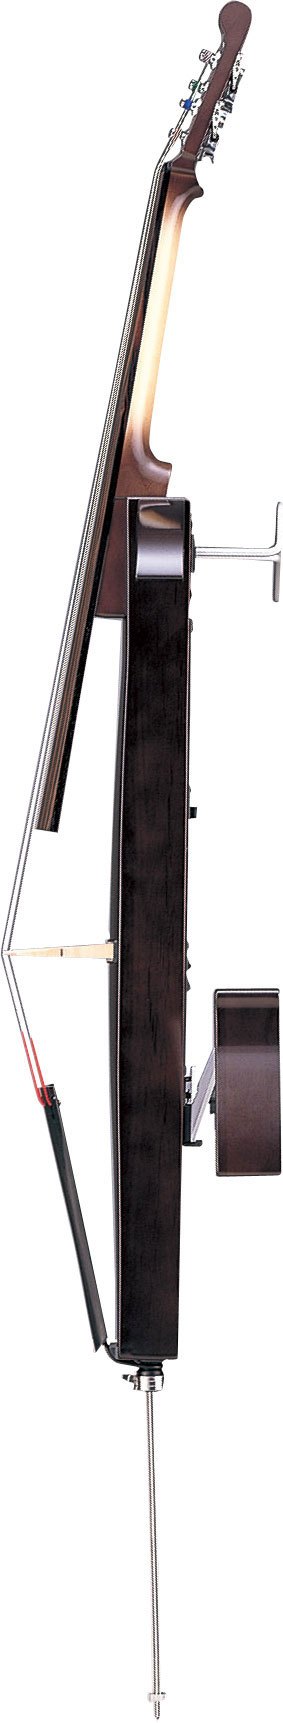 Yamaha Svc-50 Silent Cello - Elektrische cello - Variation 1